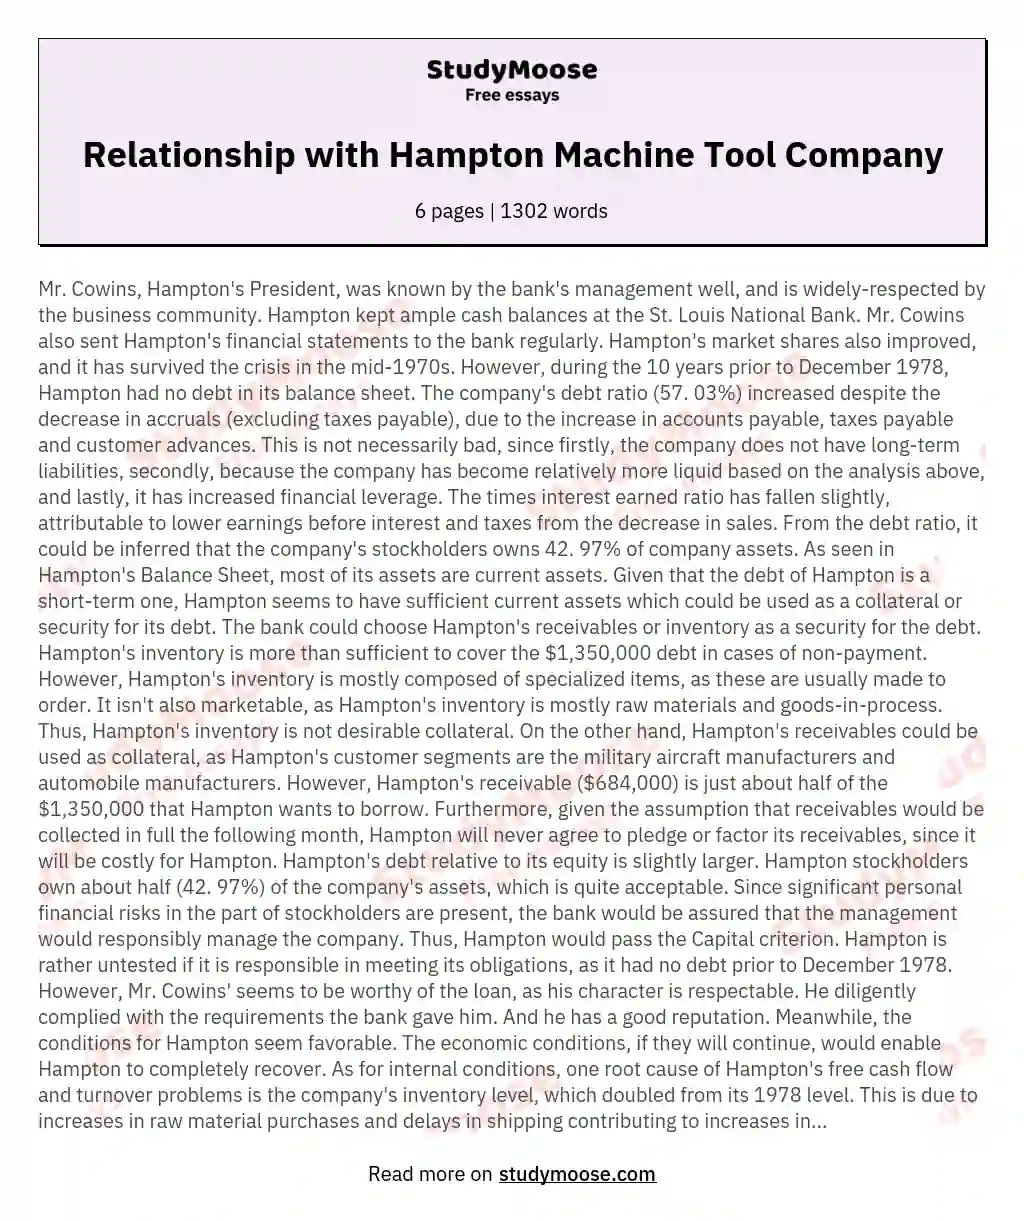 Relationship with Hampton Machine Tool Company essay